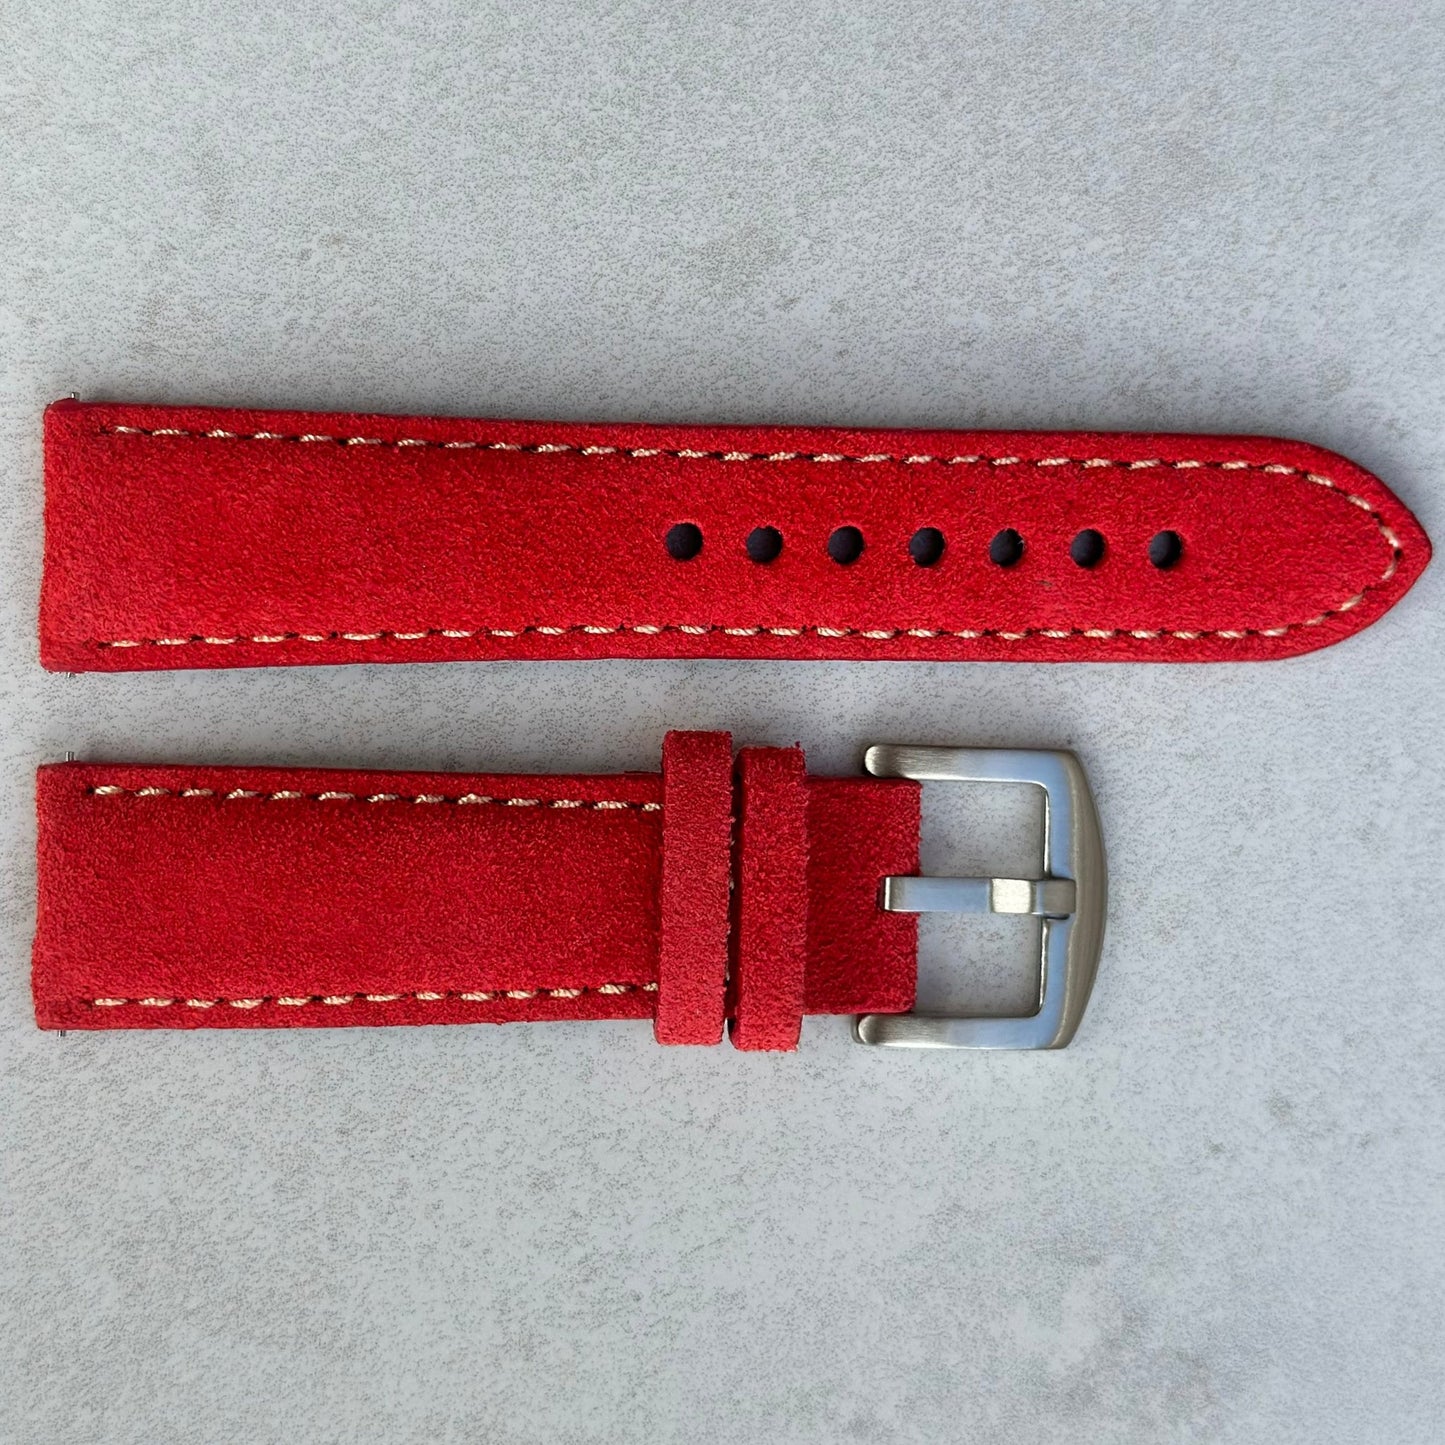 Paris ruby red suede watch strap. Ivory stitching. Padded suede strap. 18mm, 20mm, 22mm, 24mm. Watch And Strap.